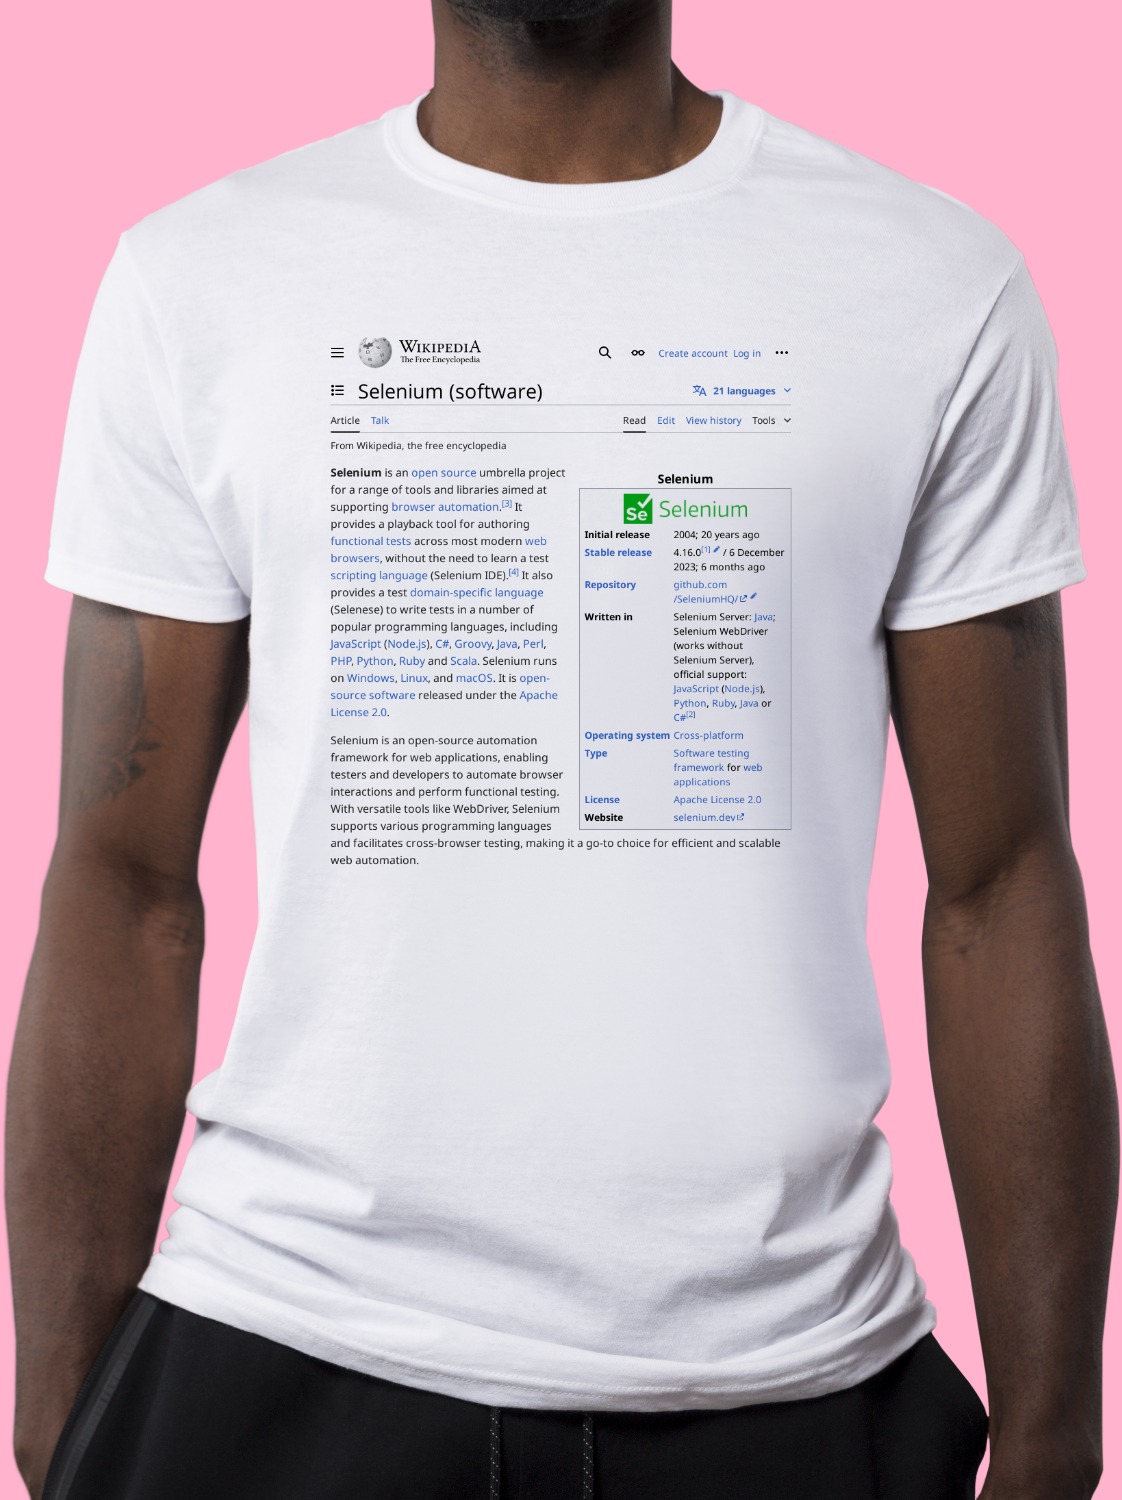 Selenium_(software) Wikipedia Shirt